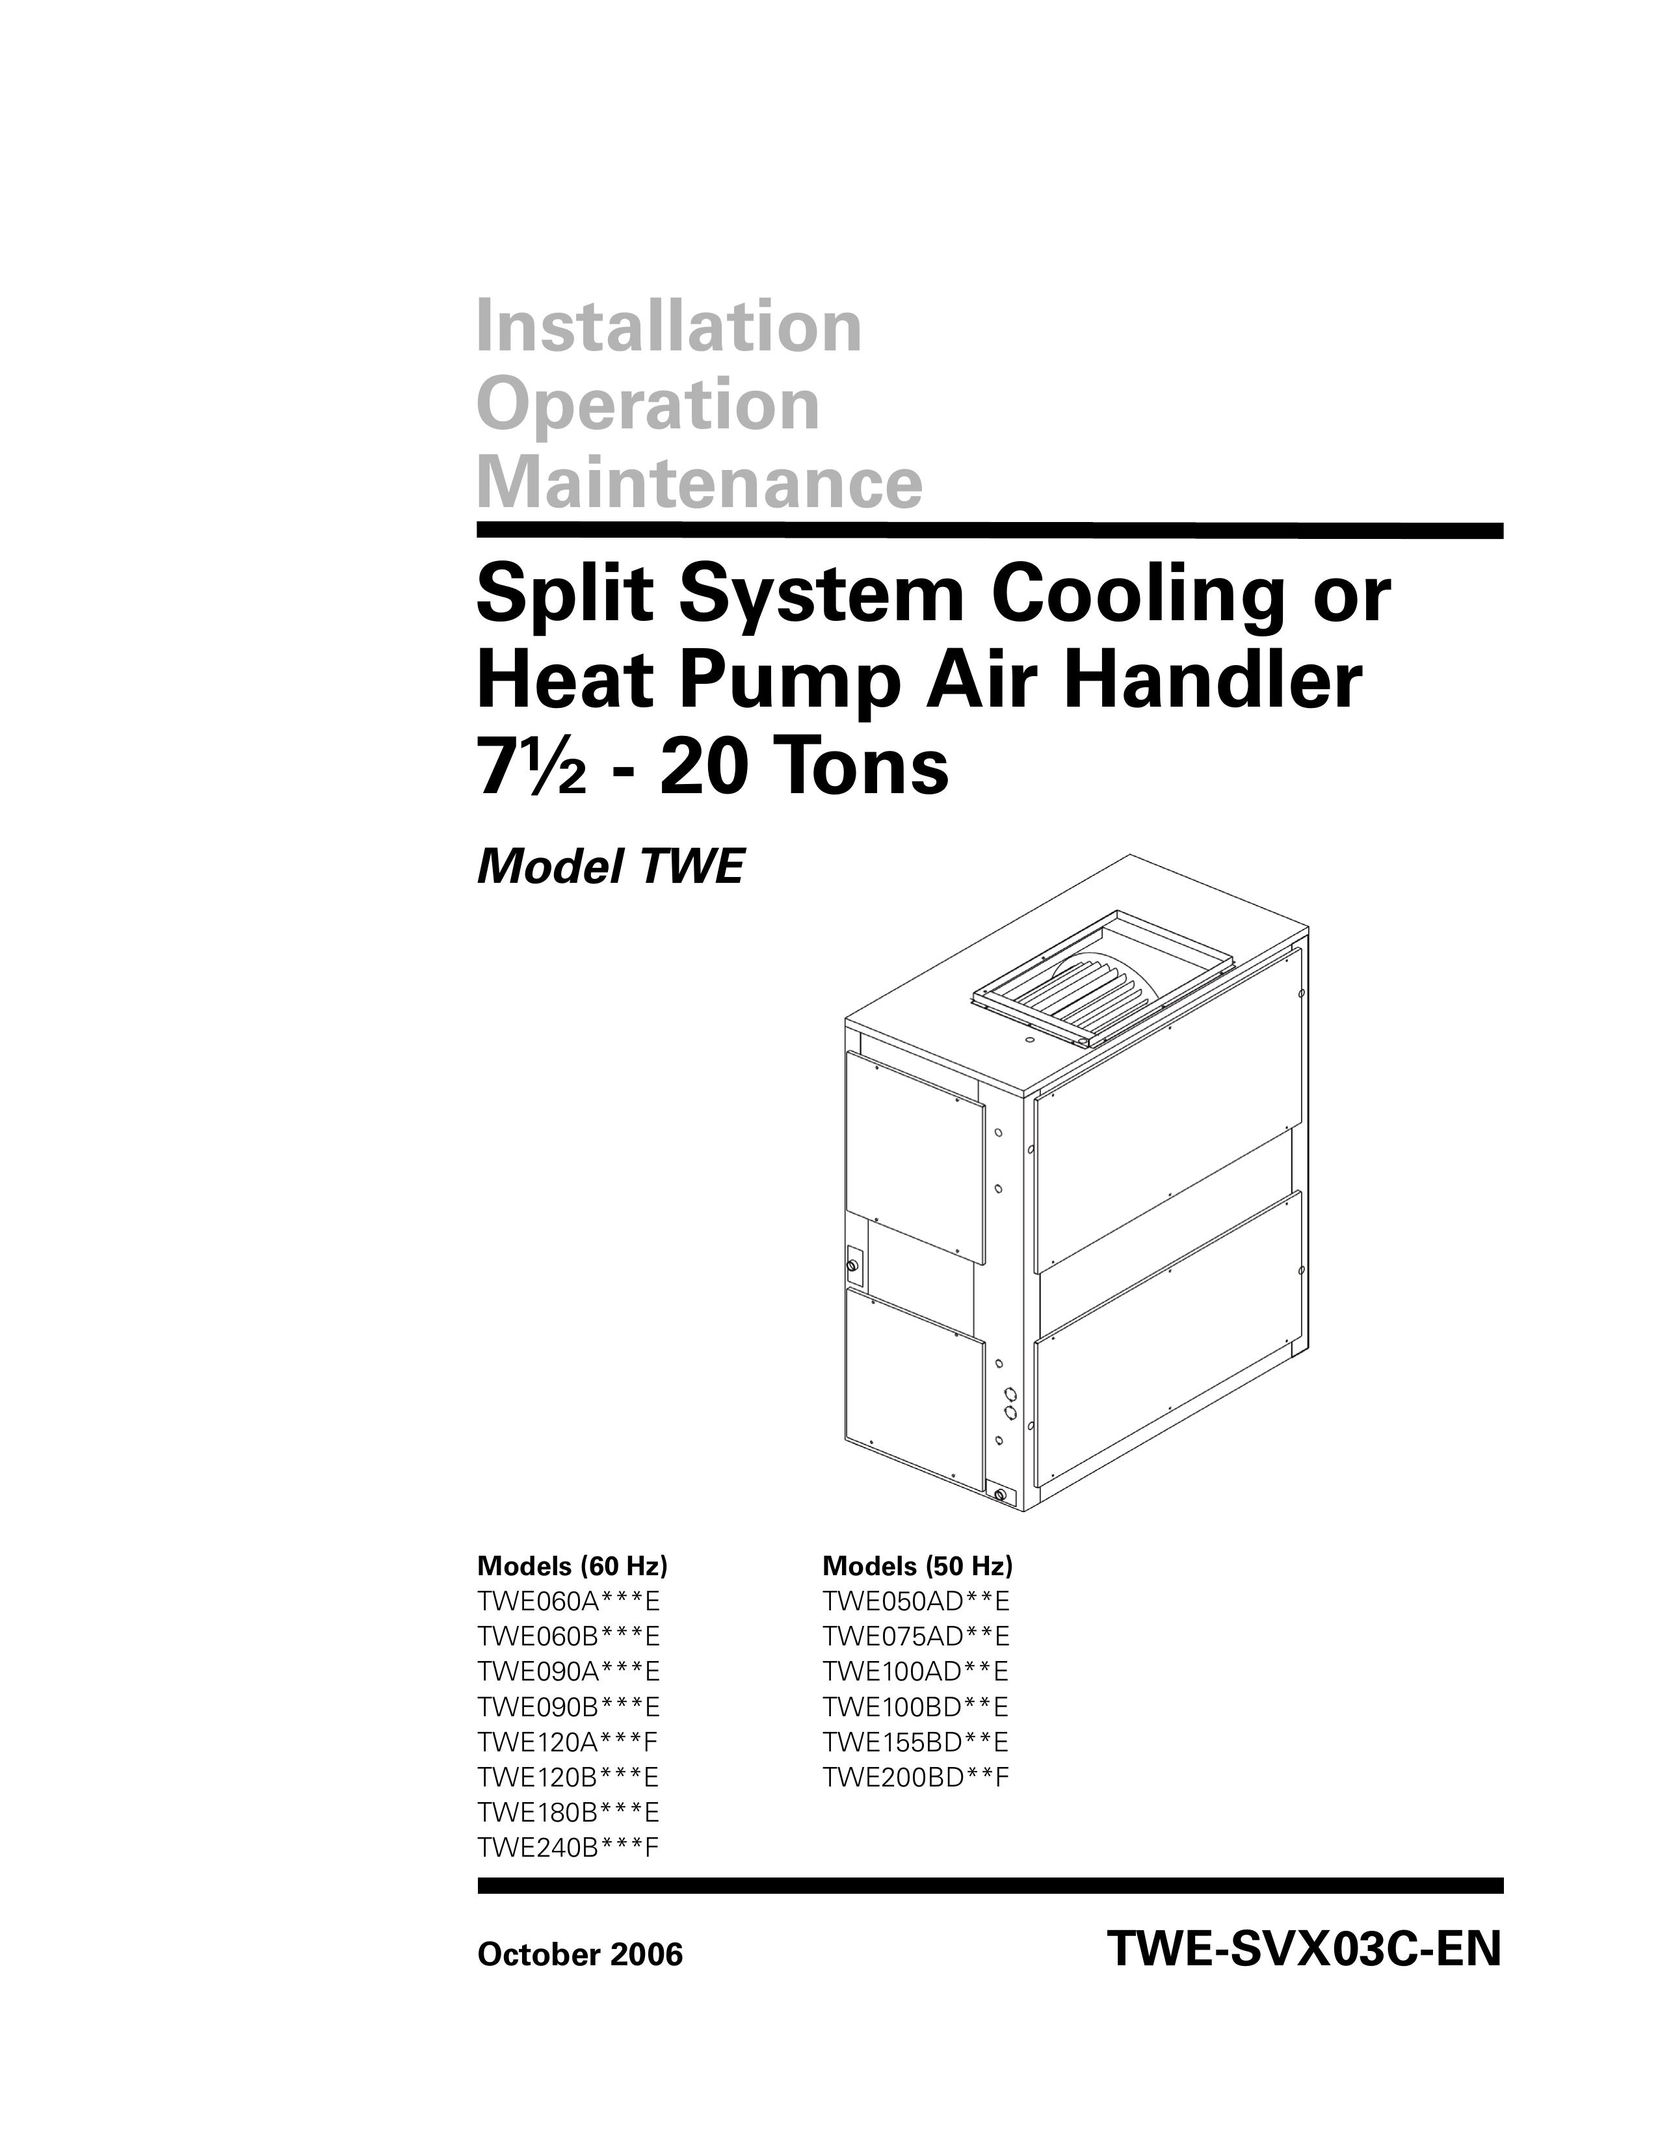 American Standard TWE100AD**E Heat Pump User Manual